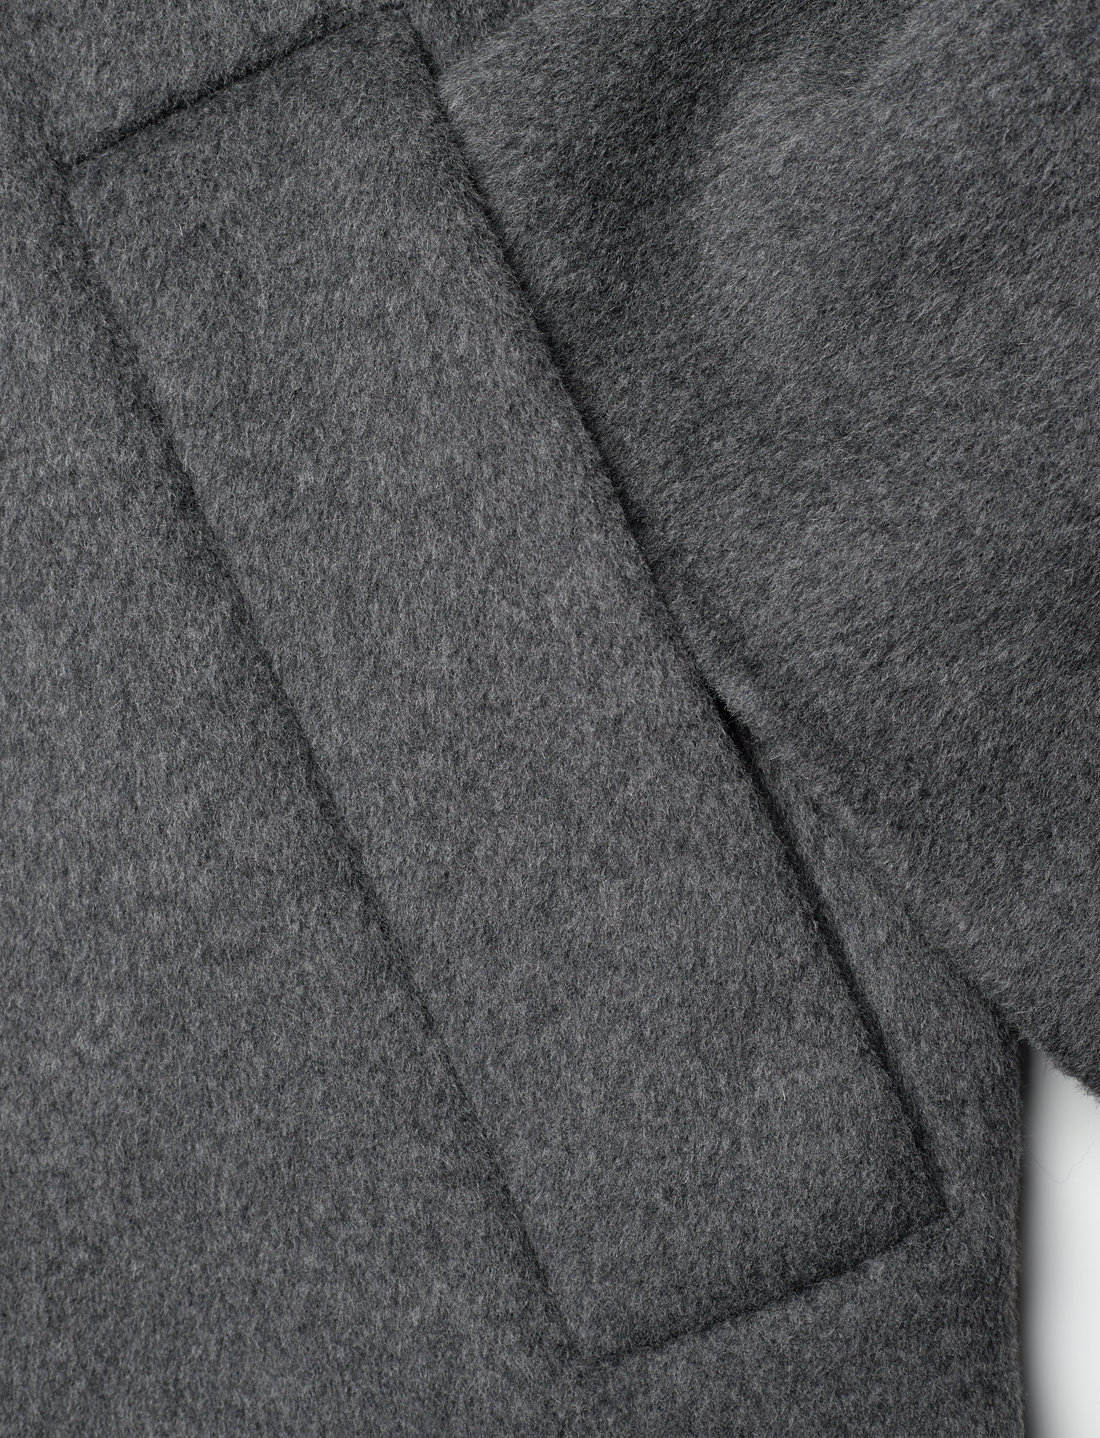 Marimekko Kapiteeli Solid - 352.69 €. Buy Winter Coats from Marimekko  online at Boozt.com. Fast delivery and easy returns